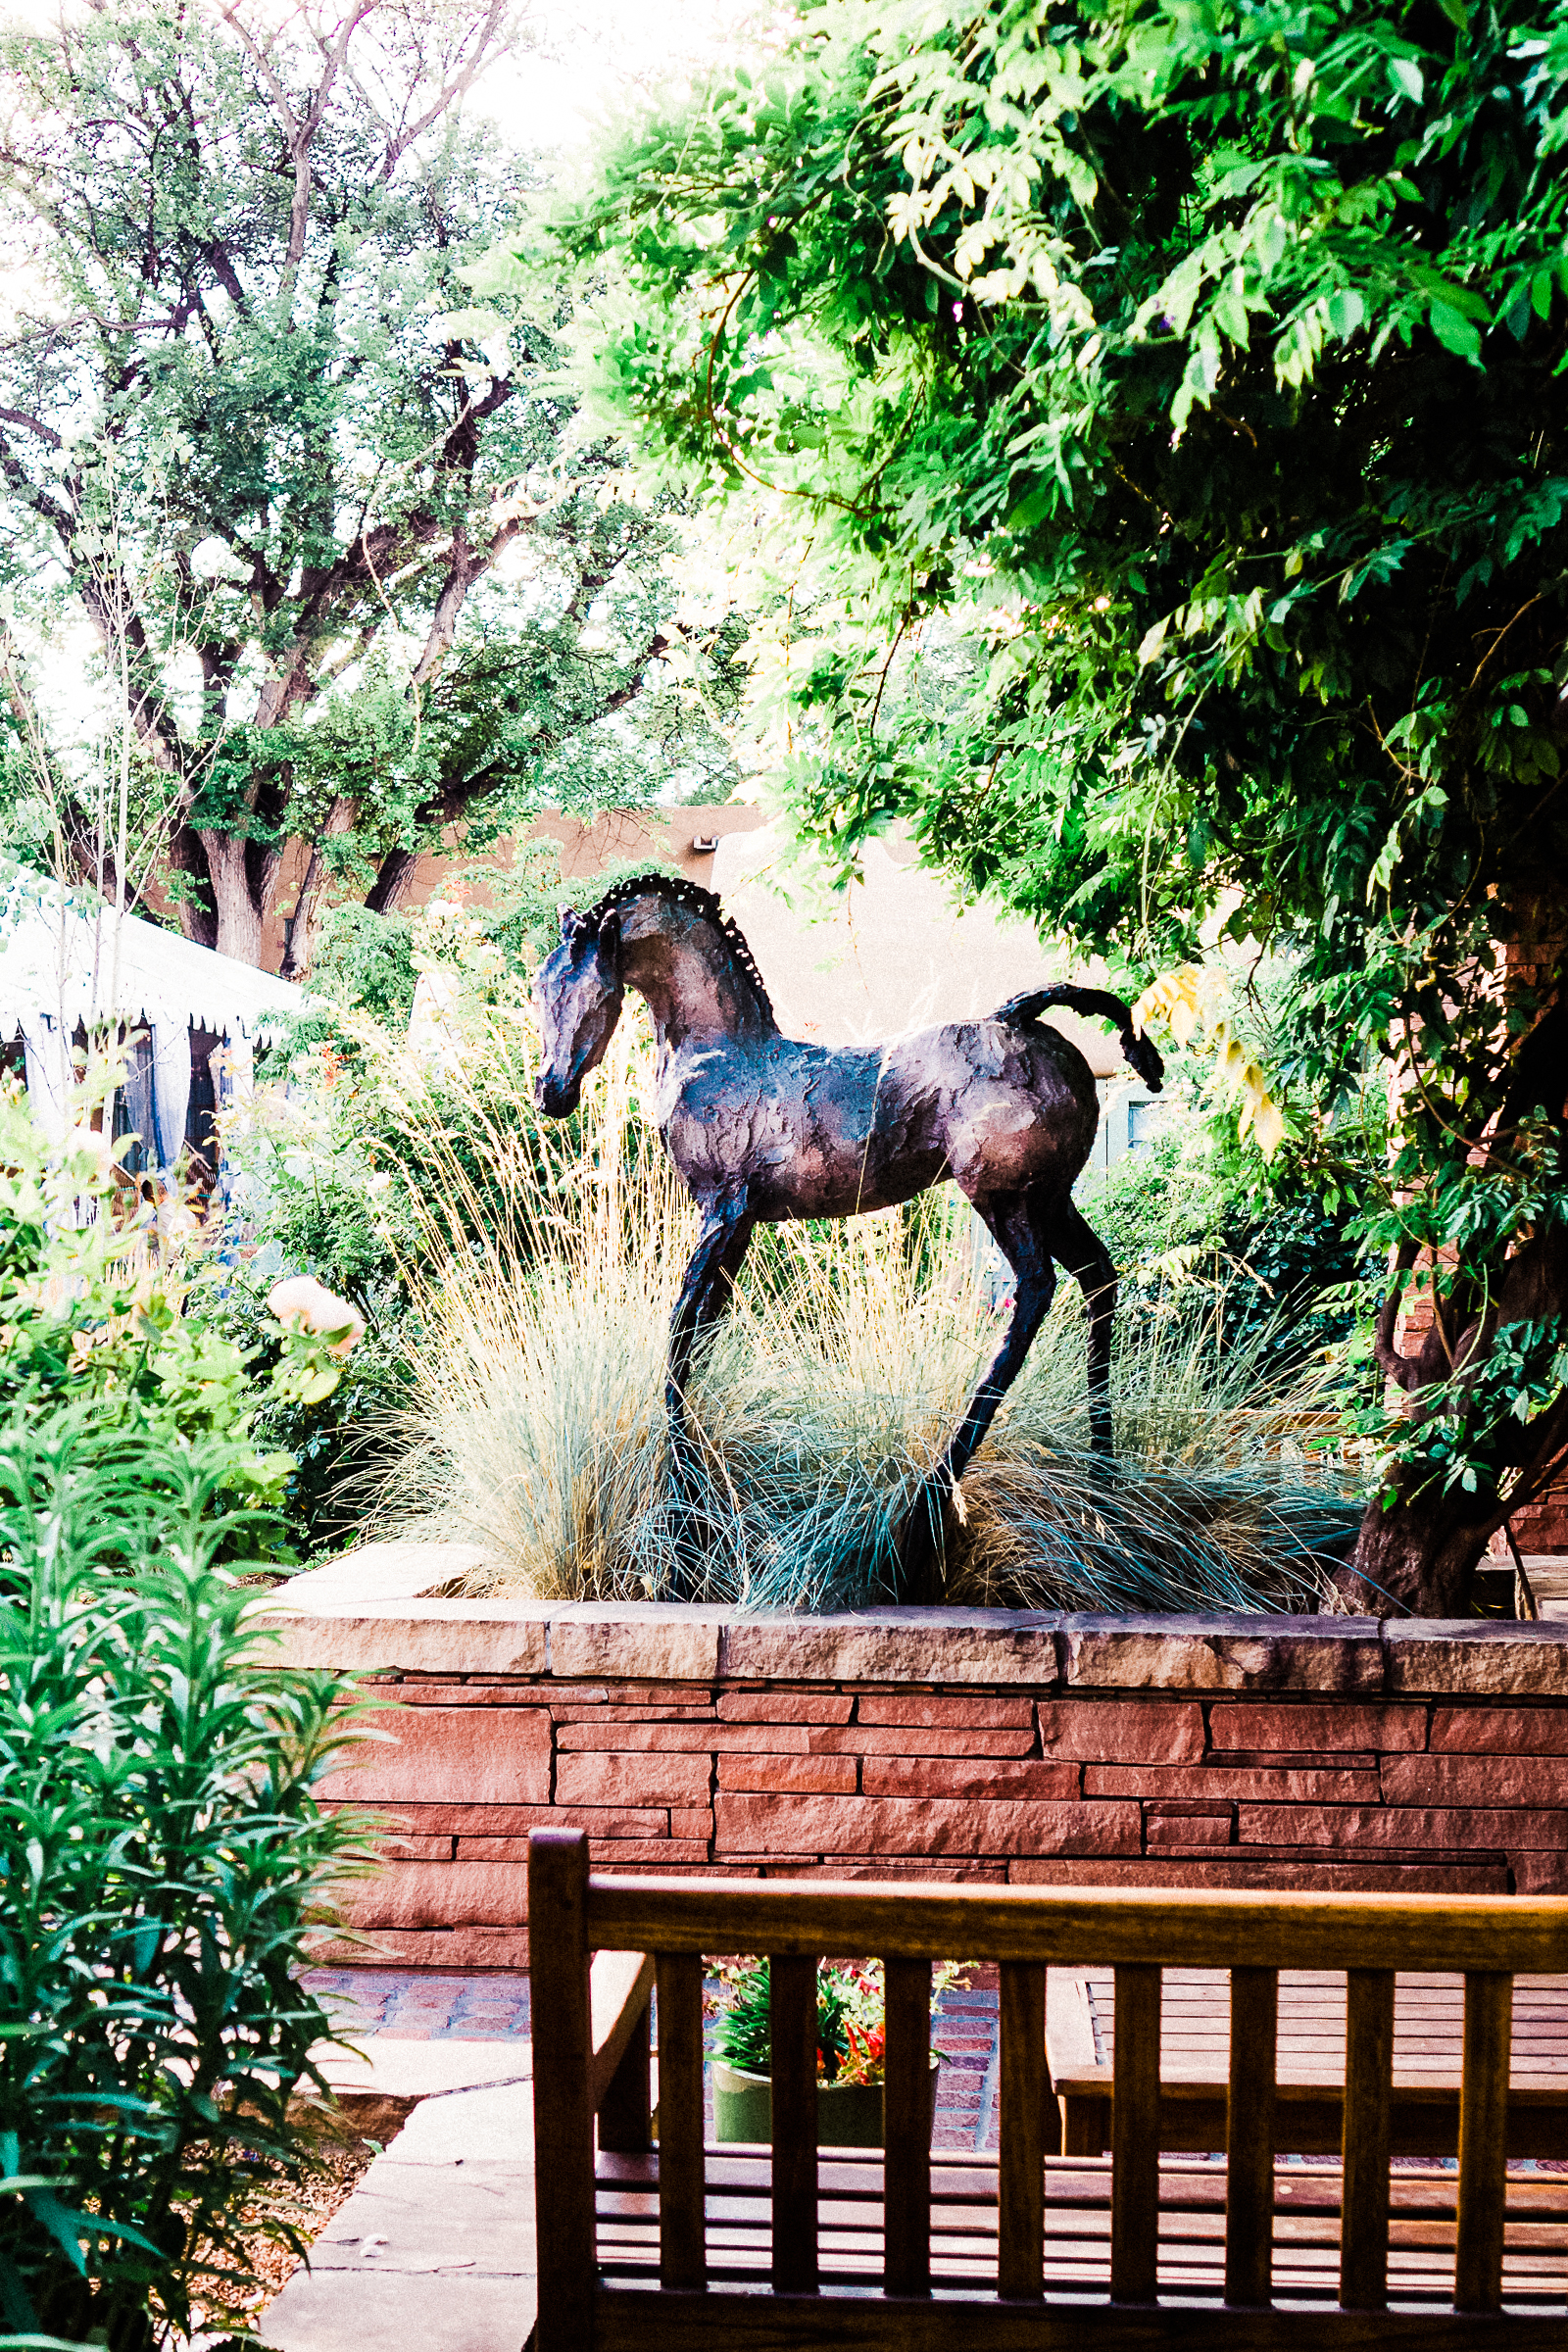 Horse Statue in Santa fe at the La Posada